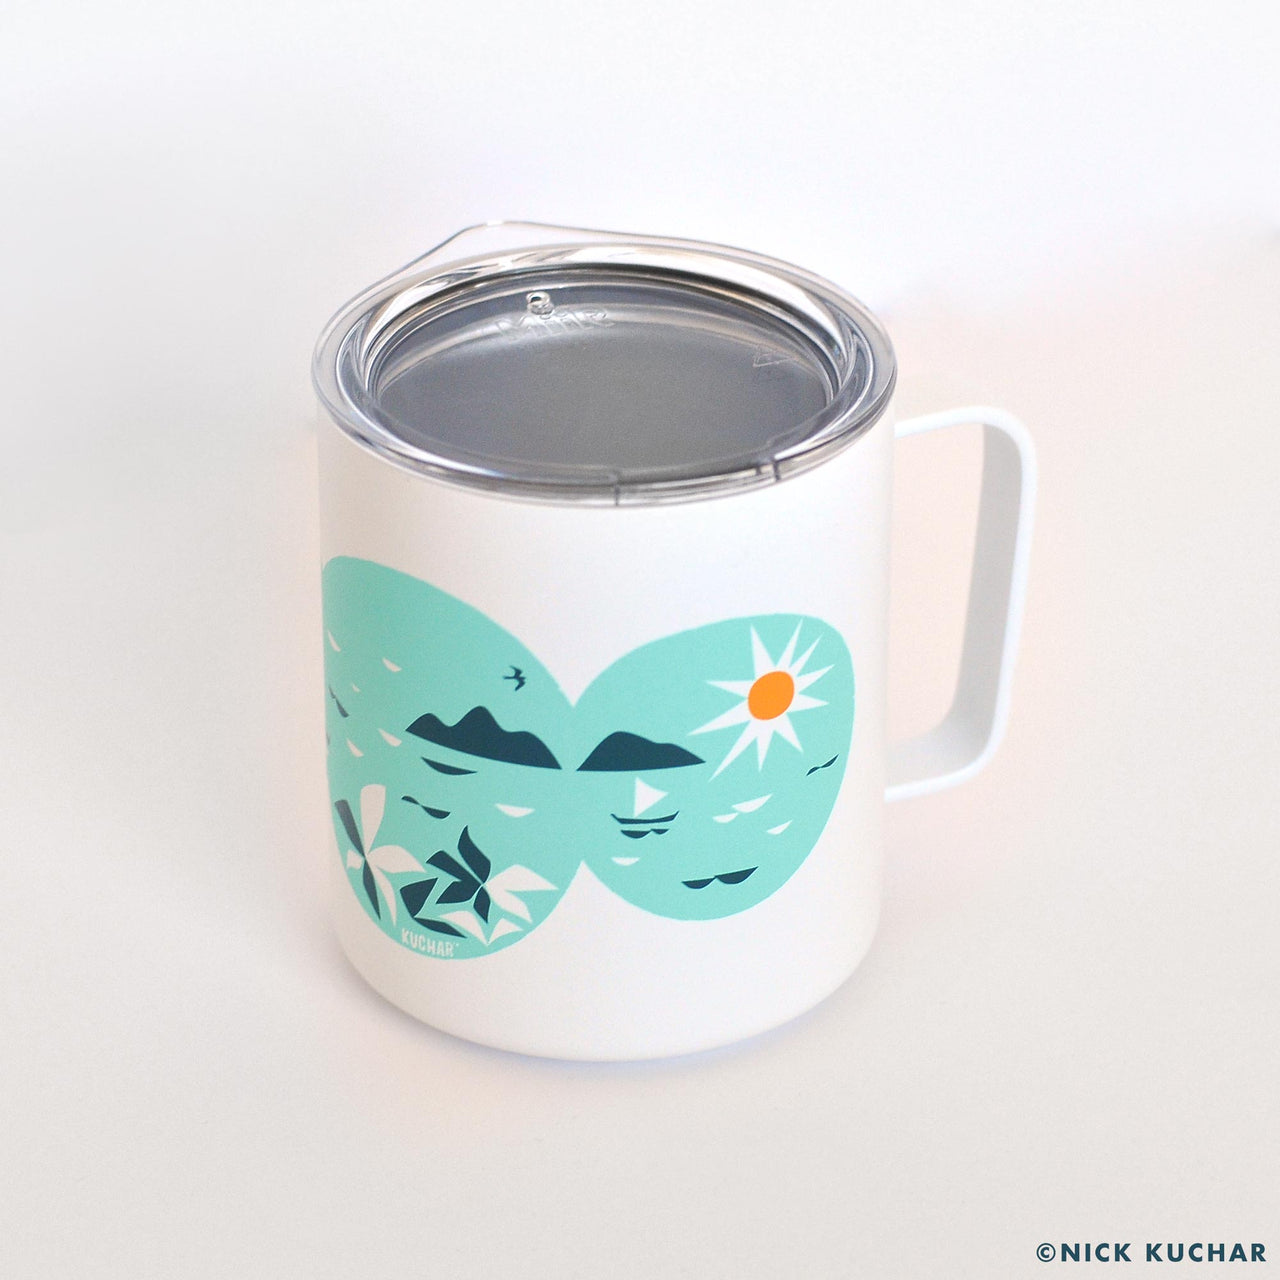 Kailua Hawaii Miir camp mug design by Nick Kuchar